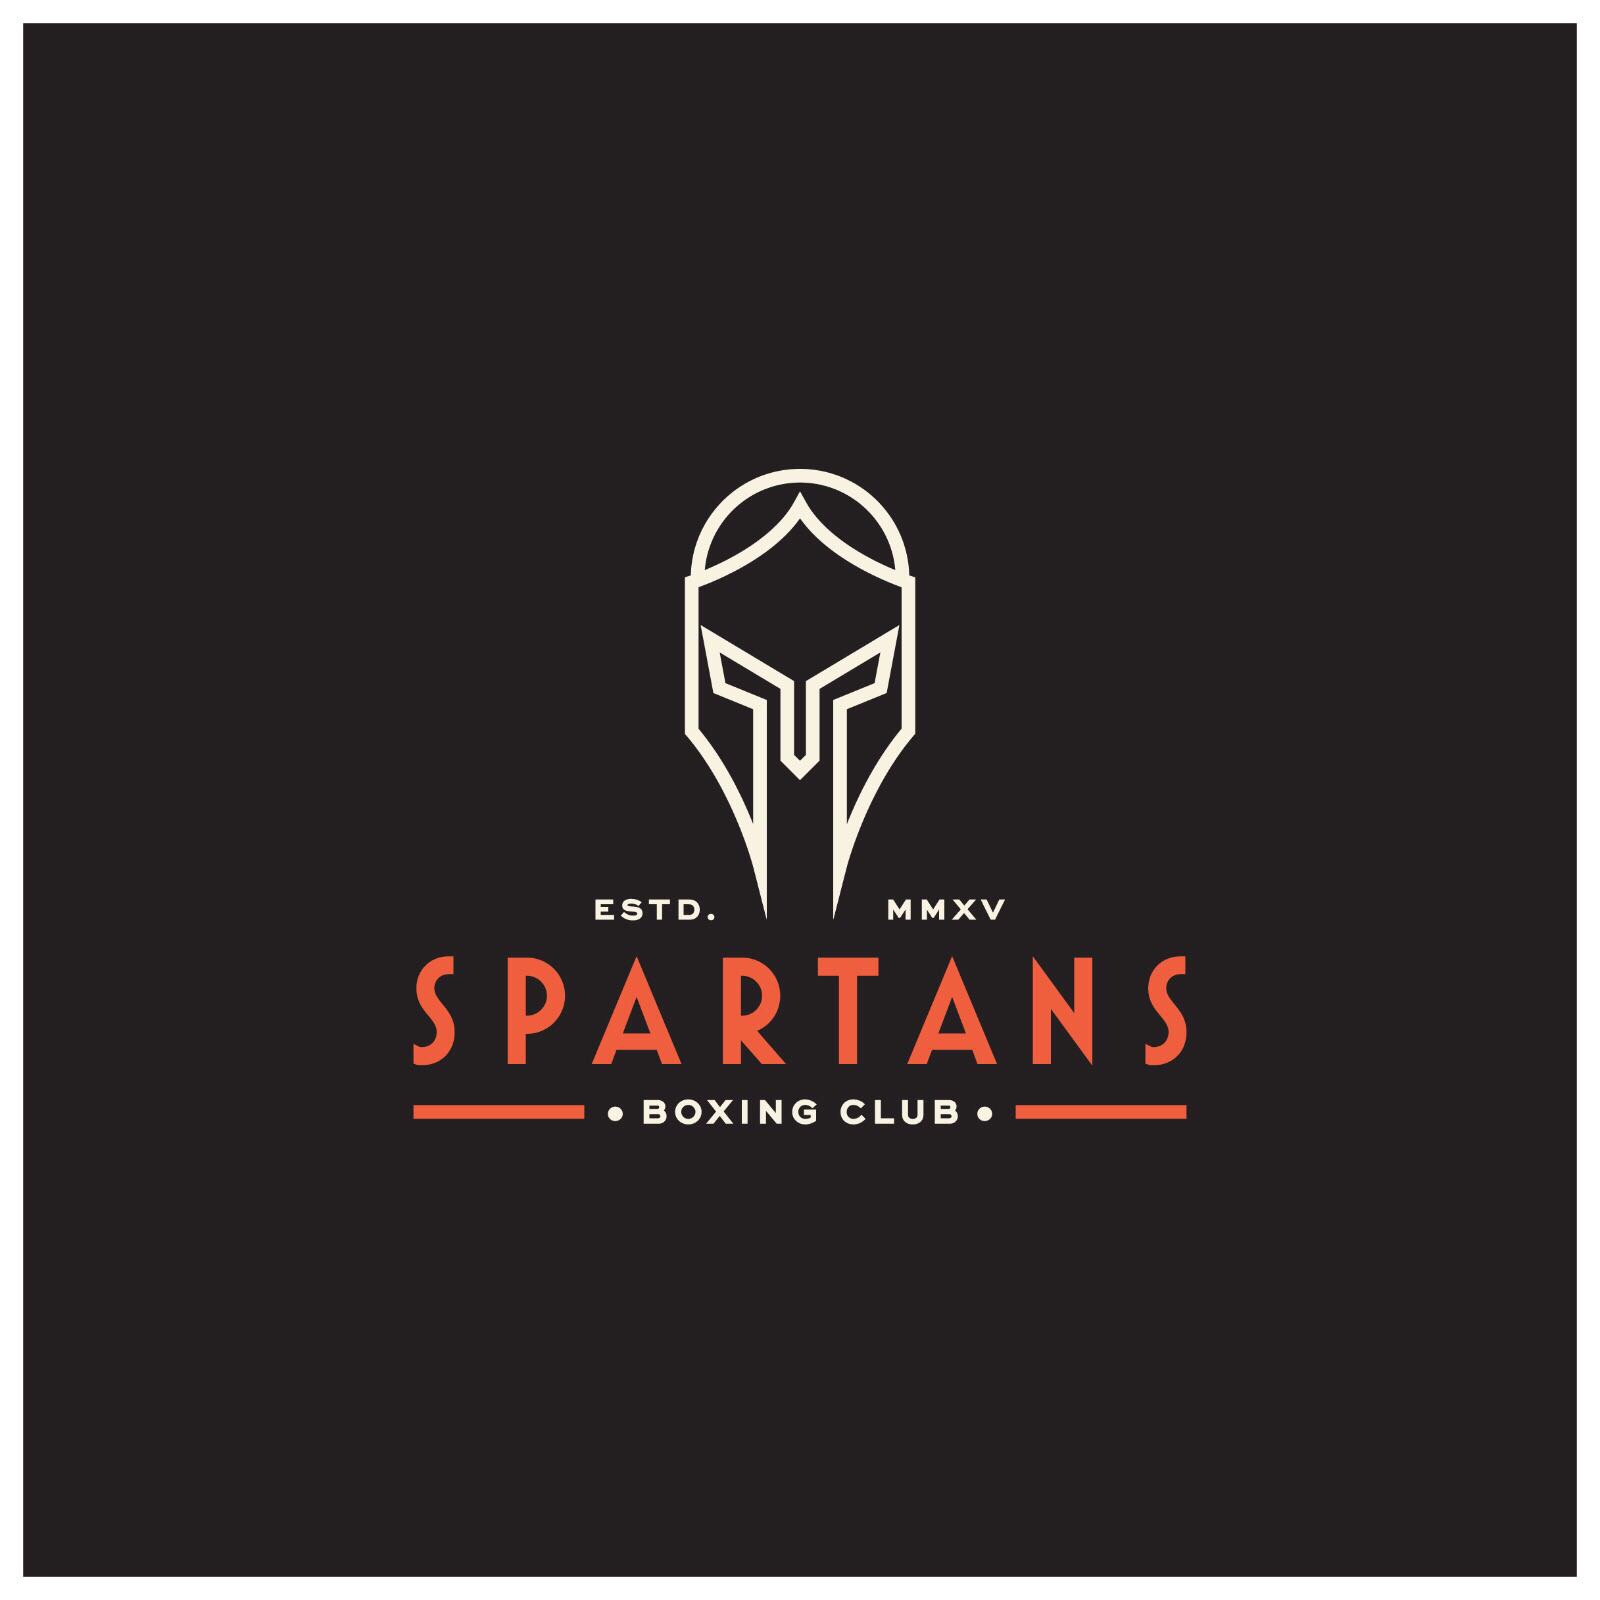 Spartans Boxing Club Serangoon Gardens